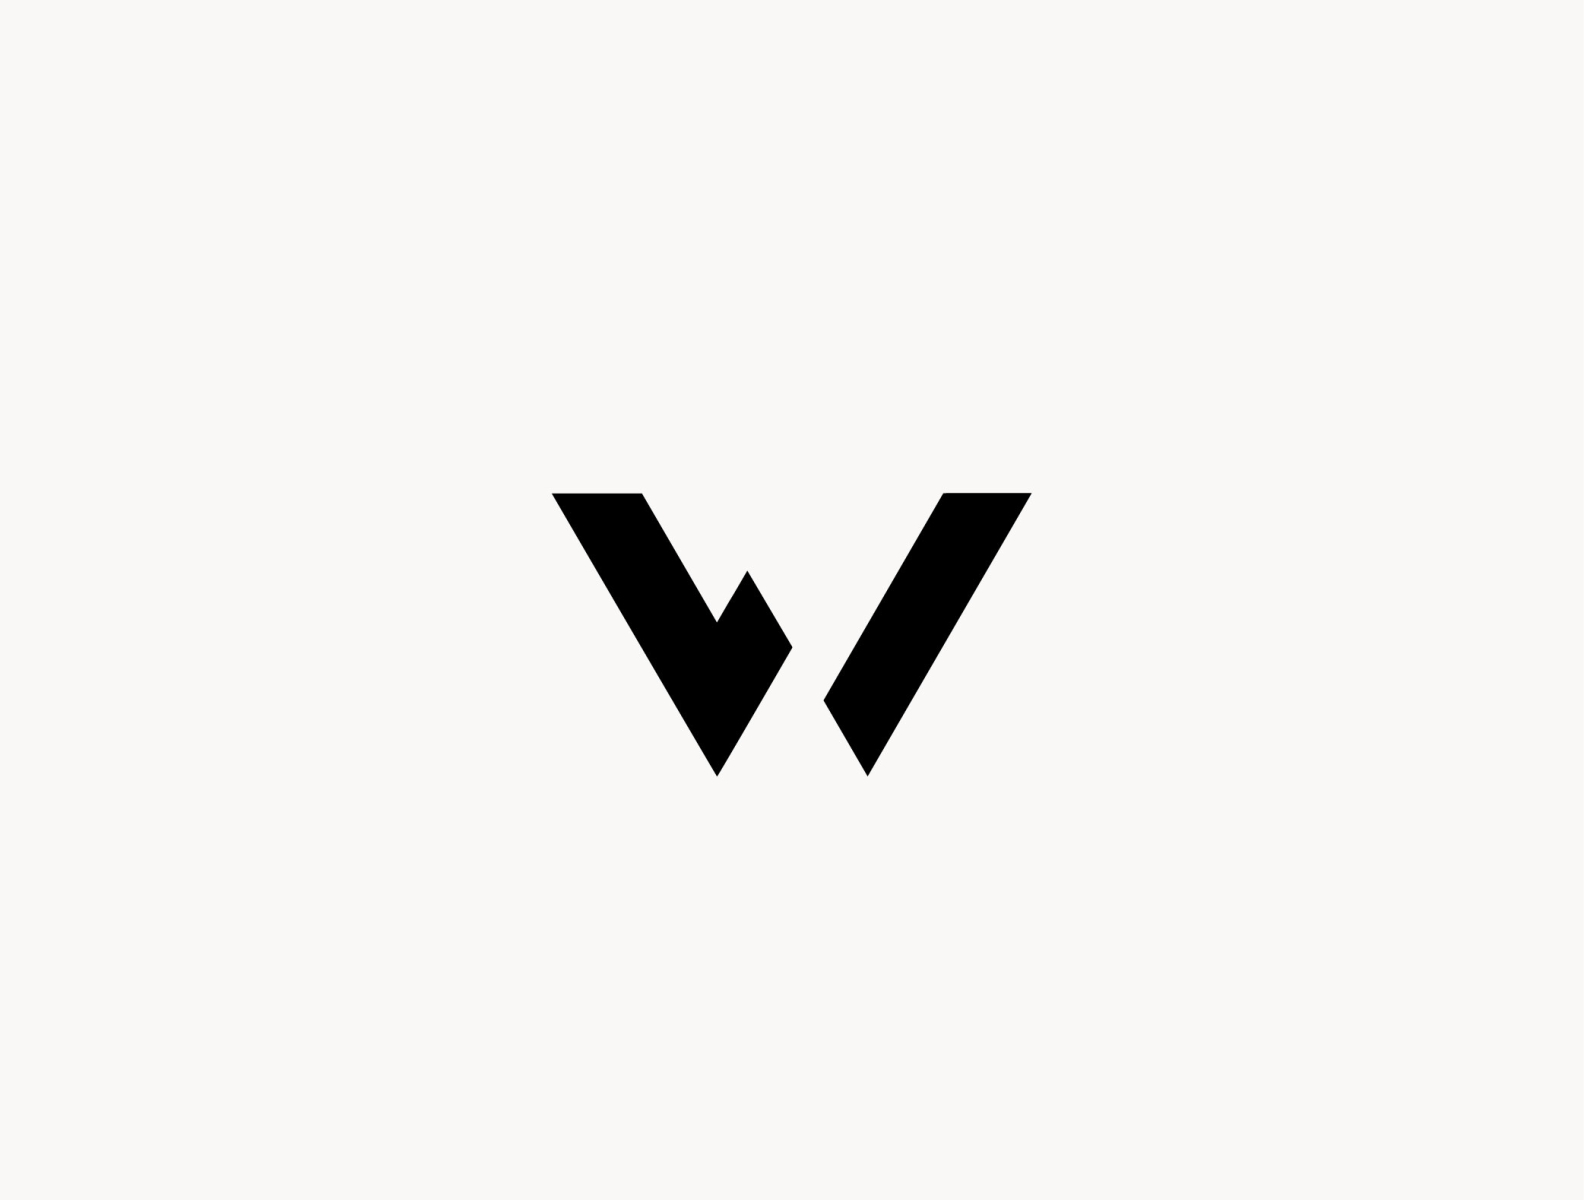 W Logo Design by Beniuto Design on Dribbble